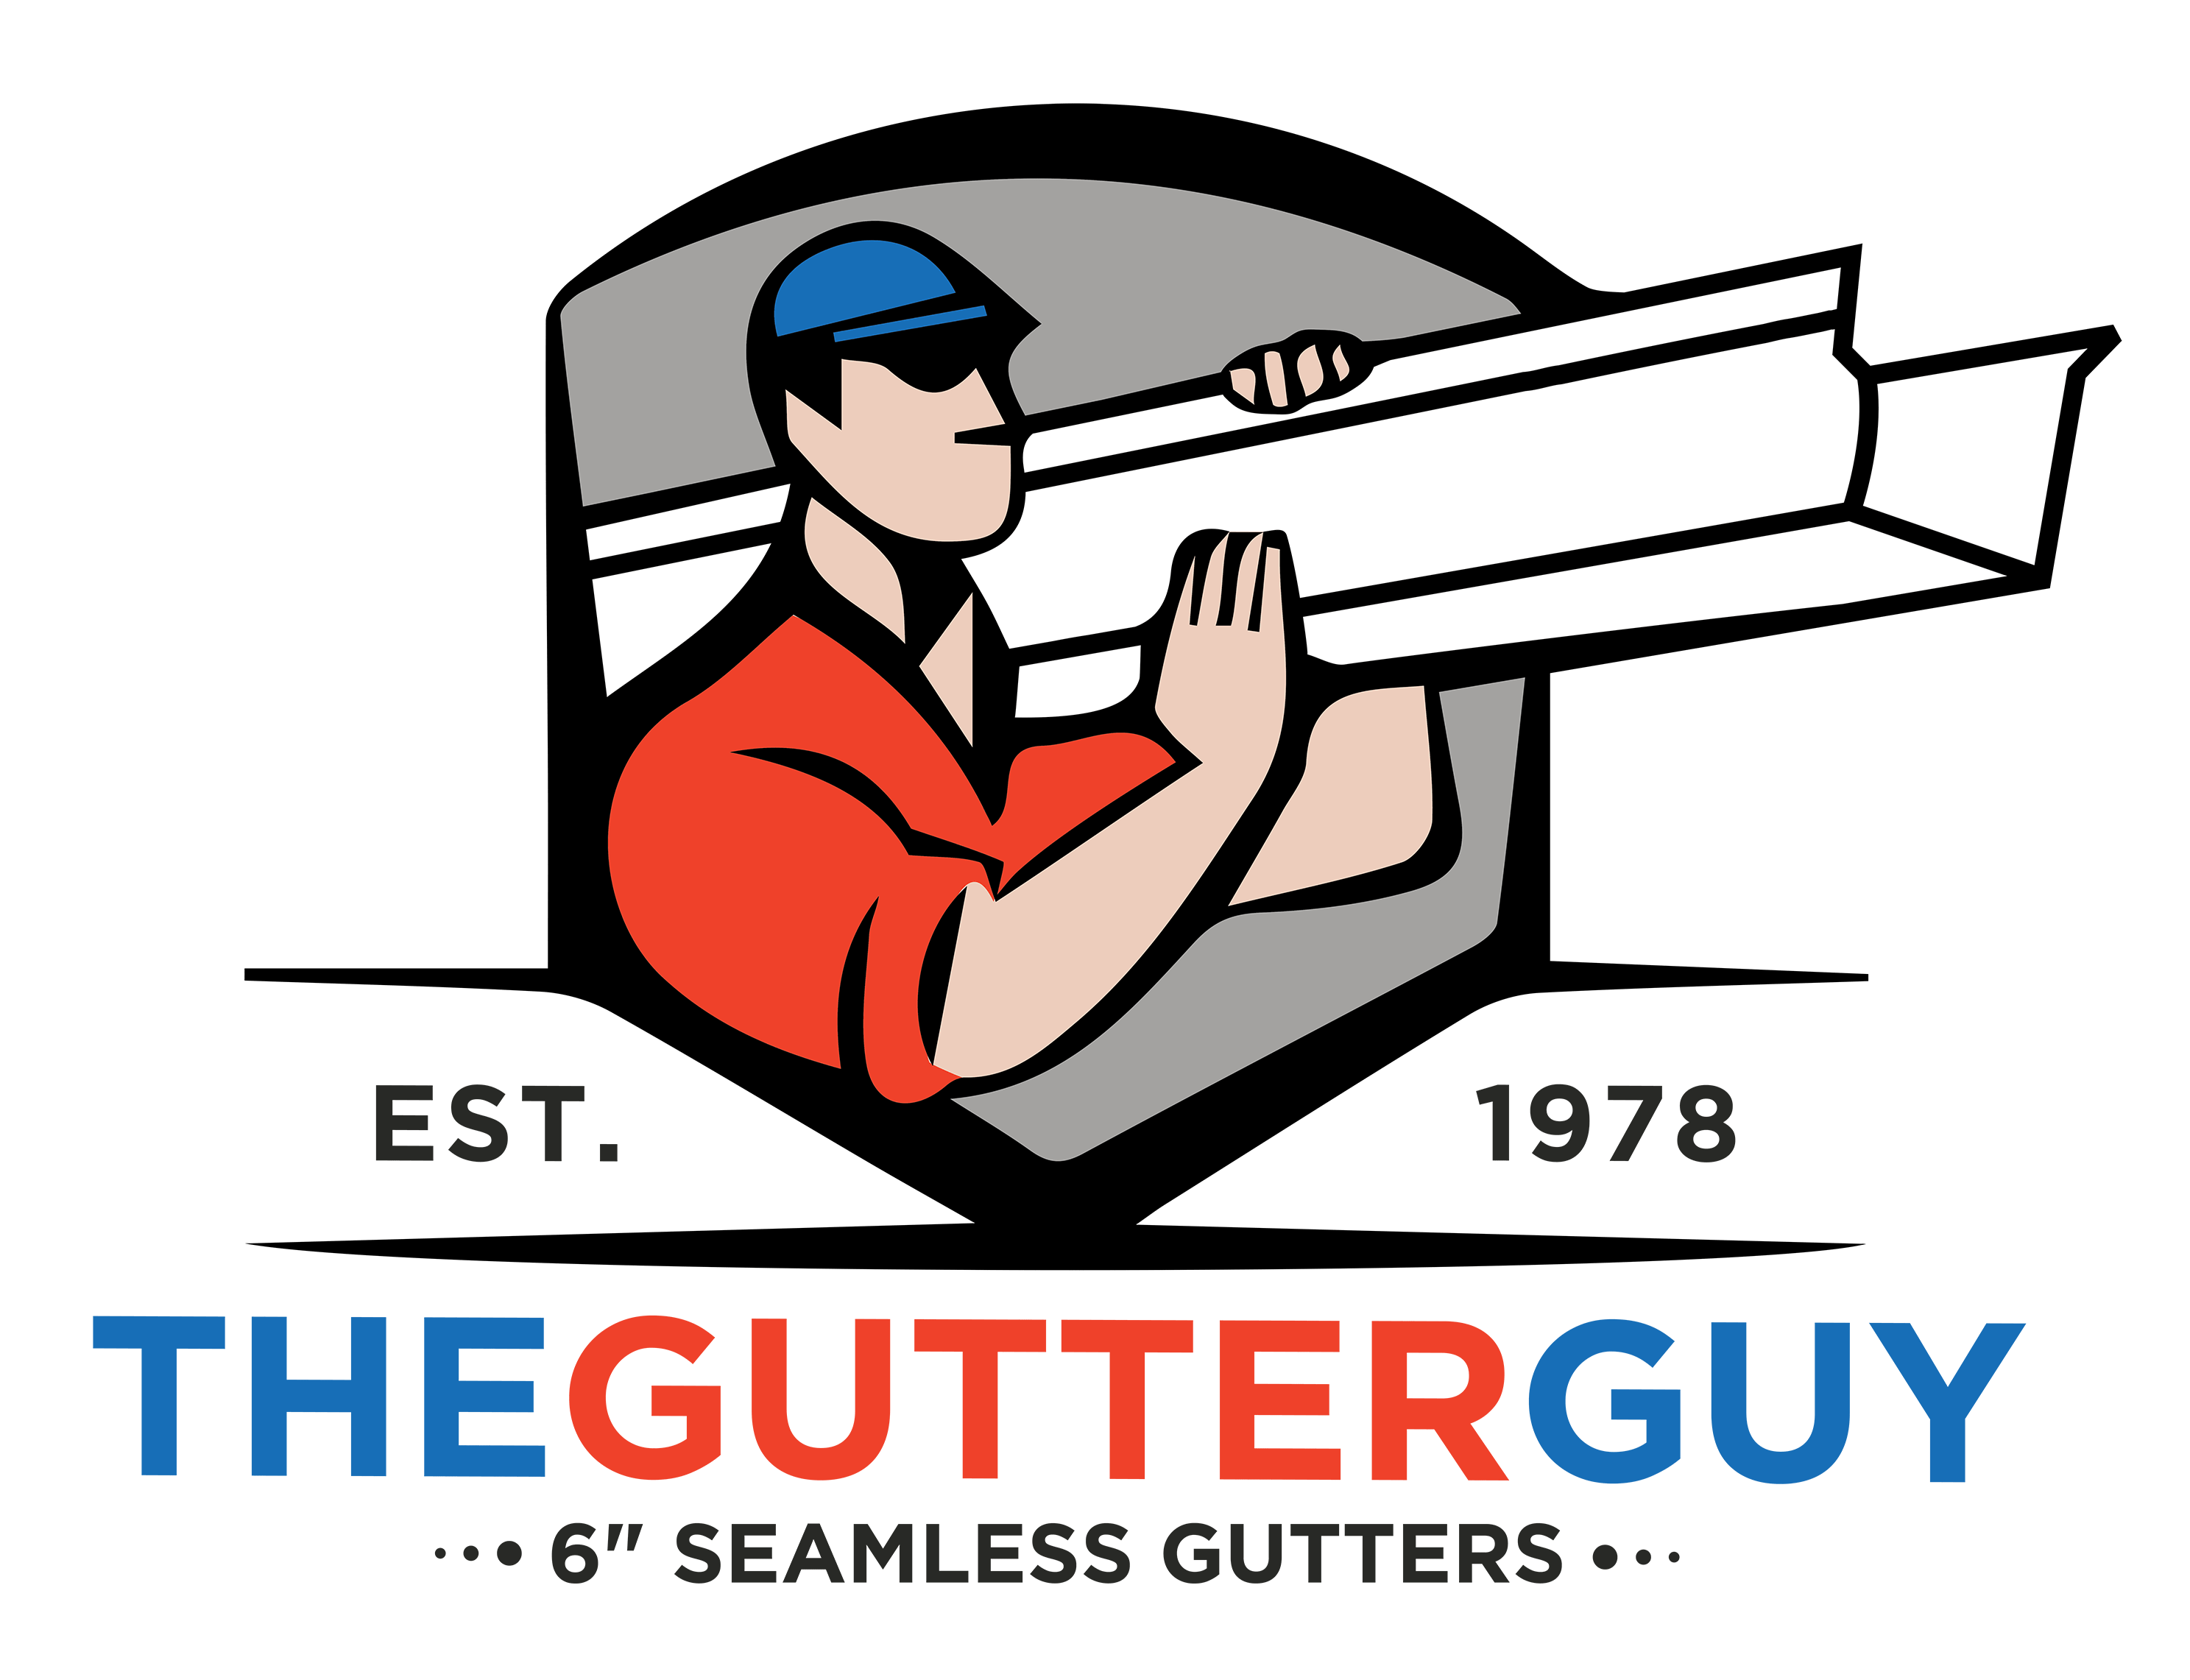 Gutter Logo - The Gutter Guy | Gutter Guy. Good Call.